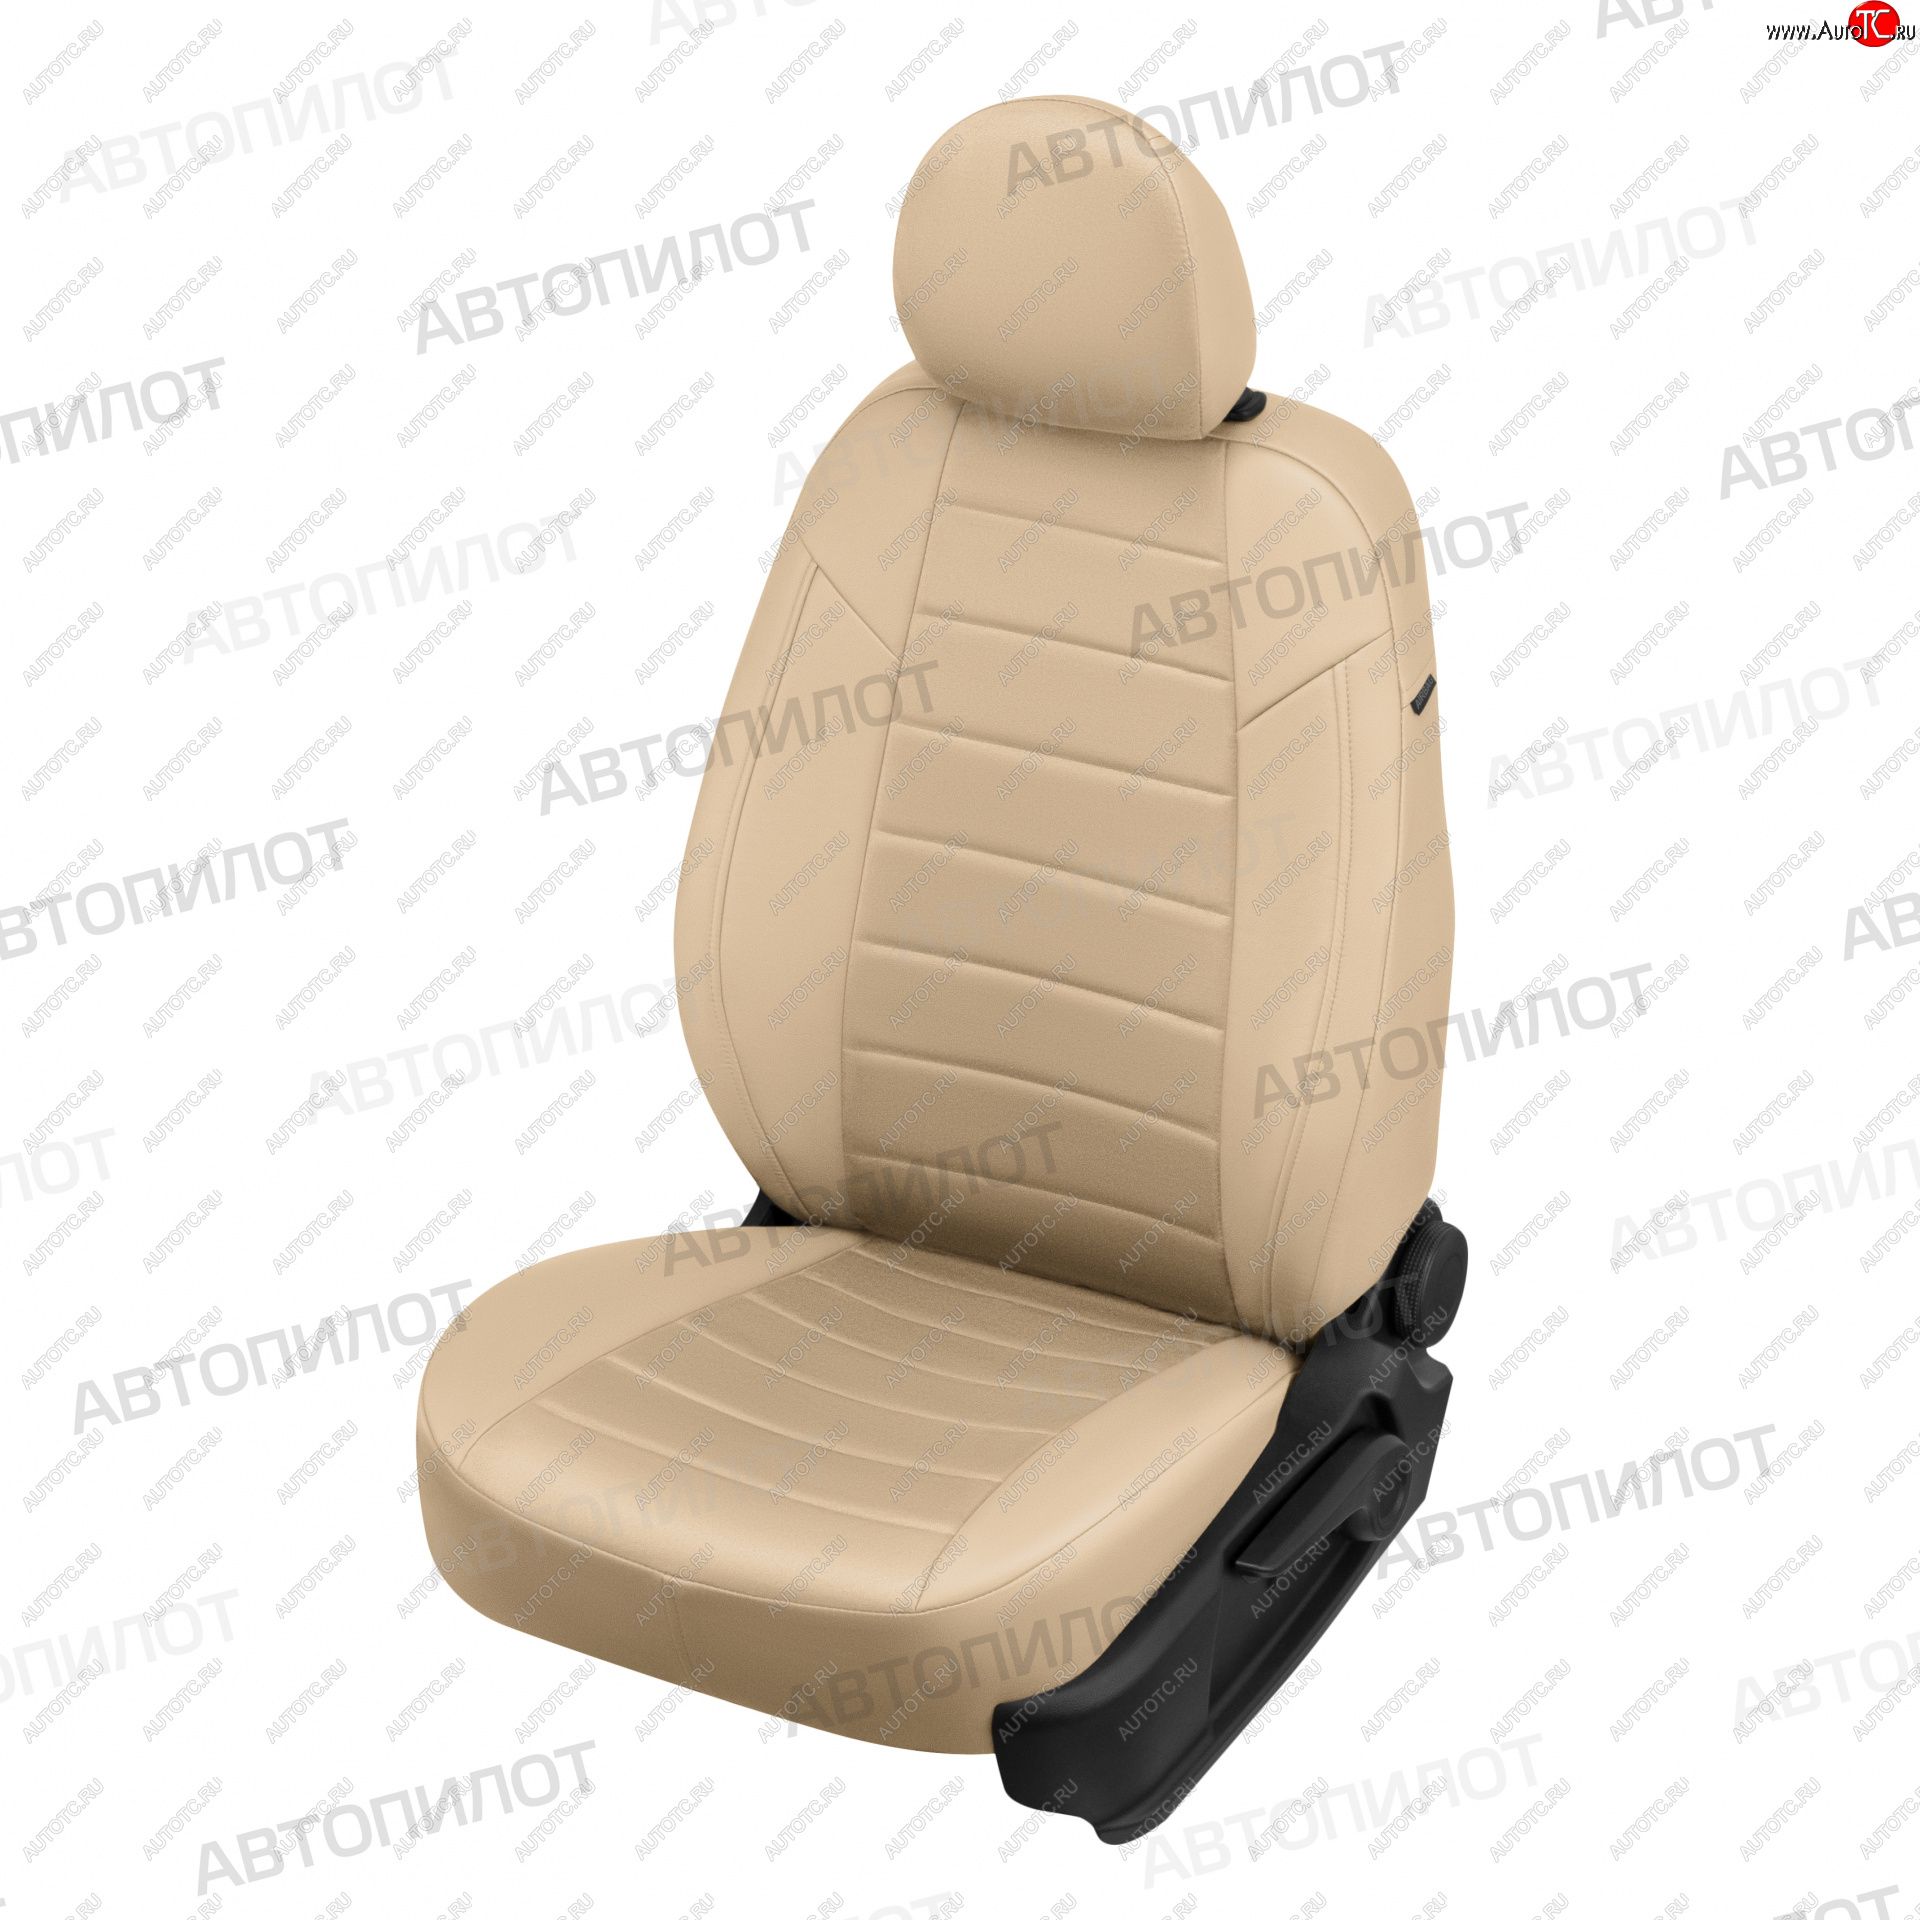 13 849 р. Чехлы сидений (5 мест, экокожа/алькантара) Автопилот  Ford Galaxy  2 (2006-2015) (бежевый)